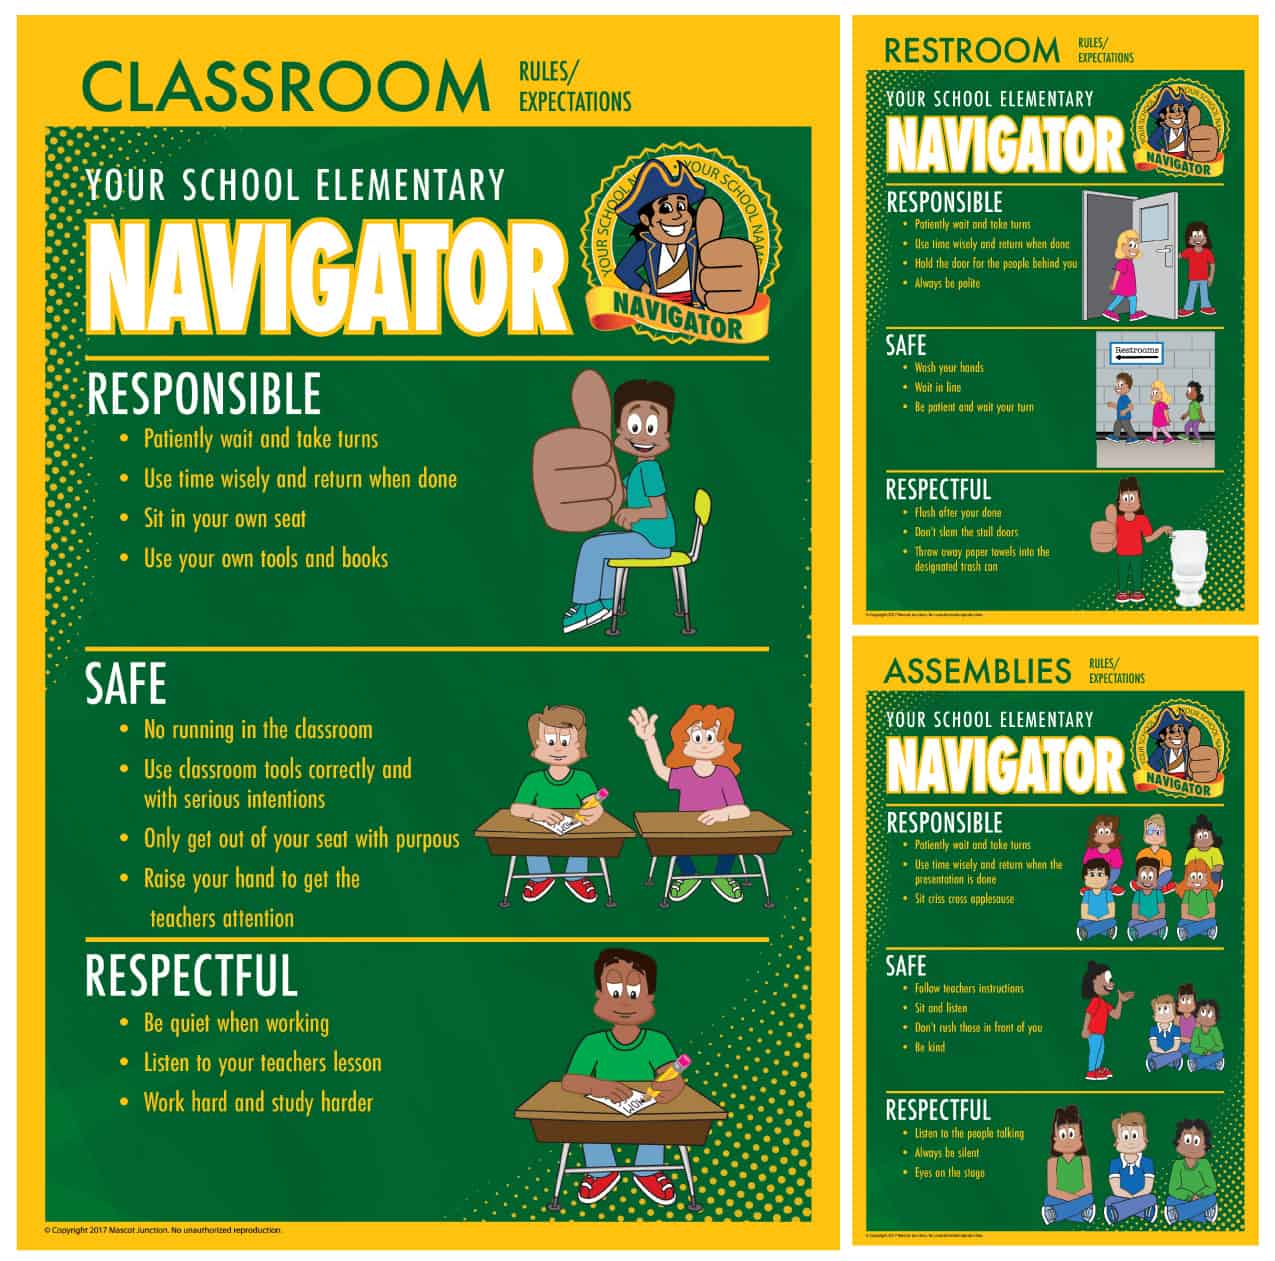 Rules-posters_Navigator